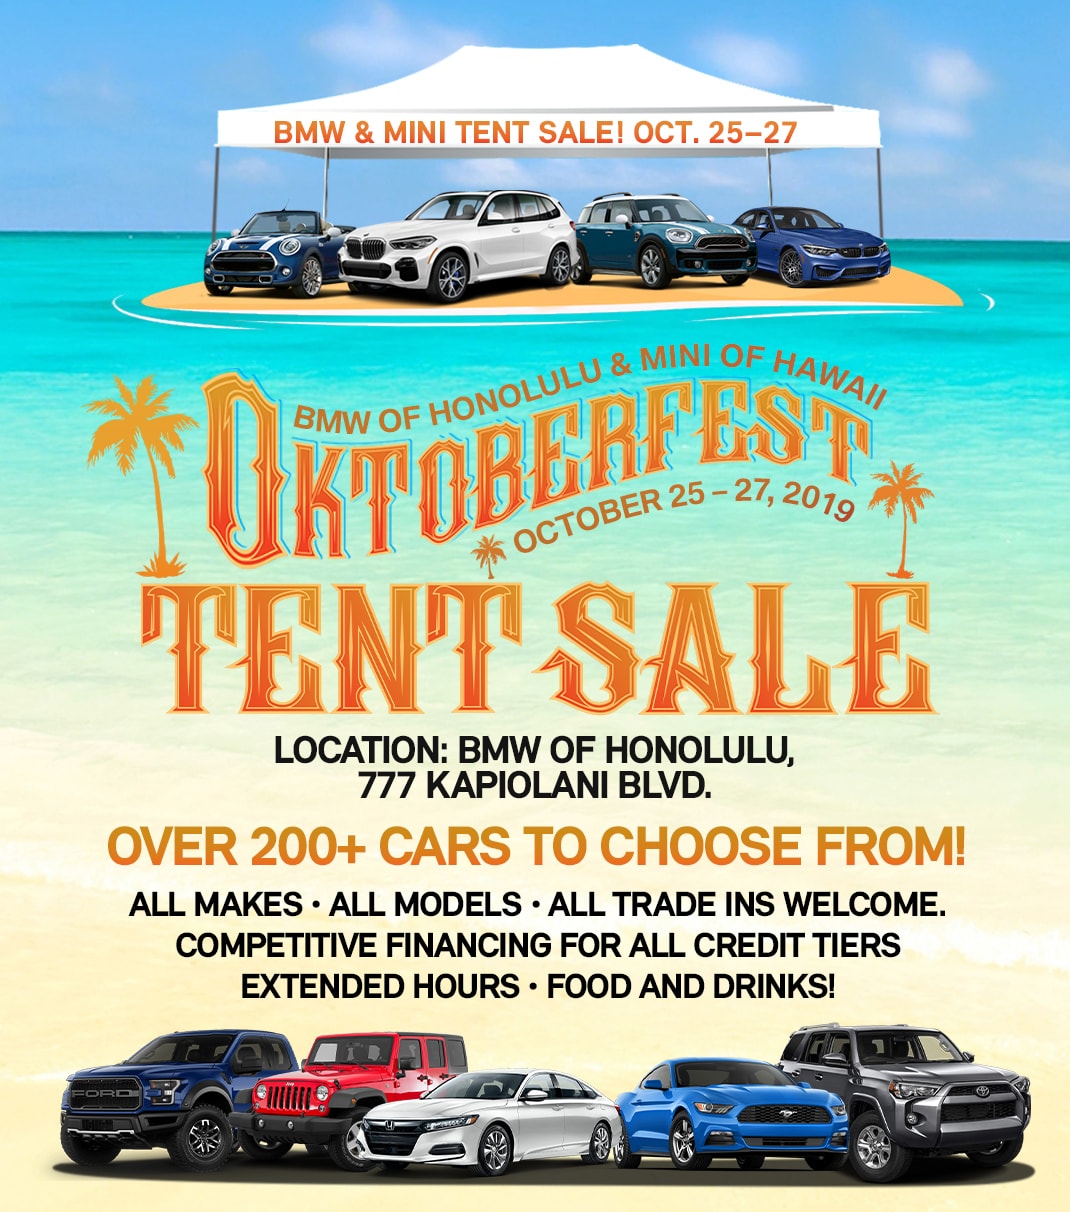 OKTOBERFEST TENT EVENT AT BMW OF HONOLULU, OCTOBER 2527 BMW of Honolulu